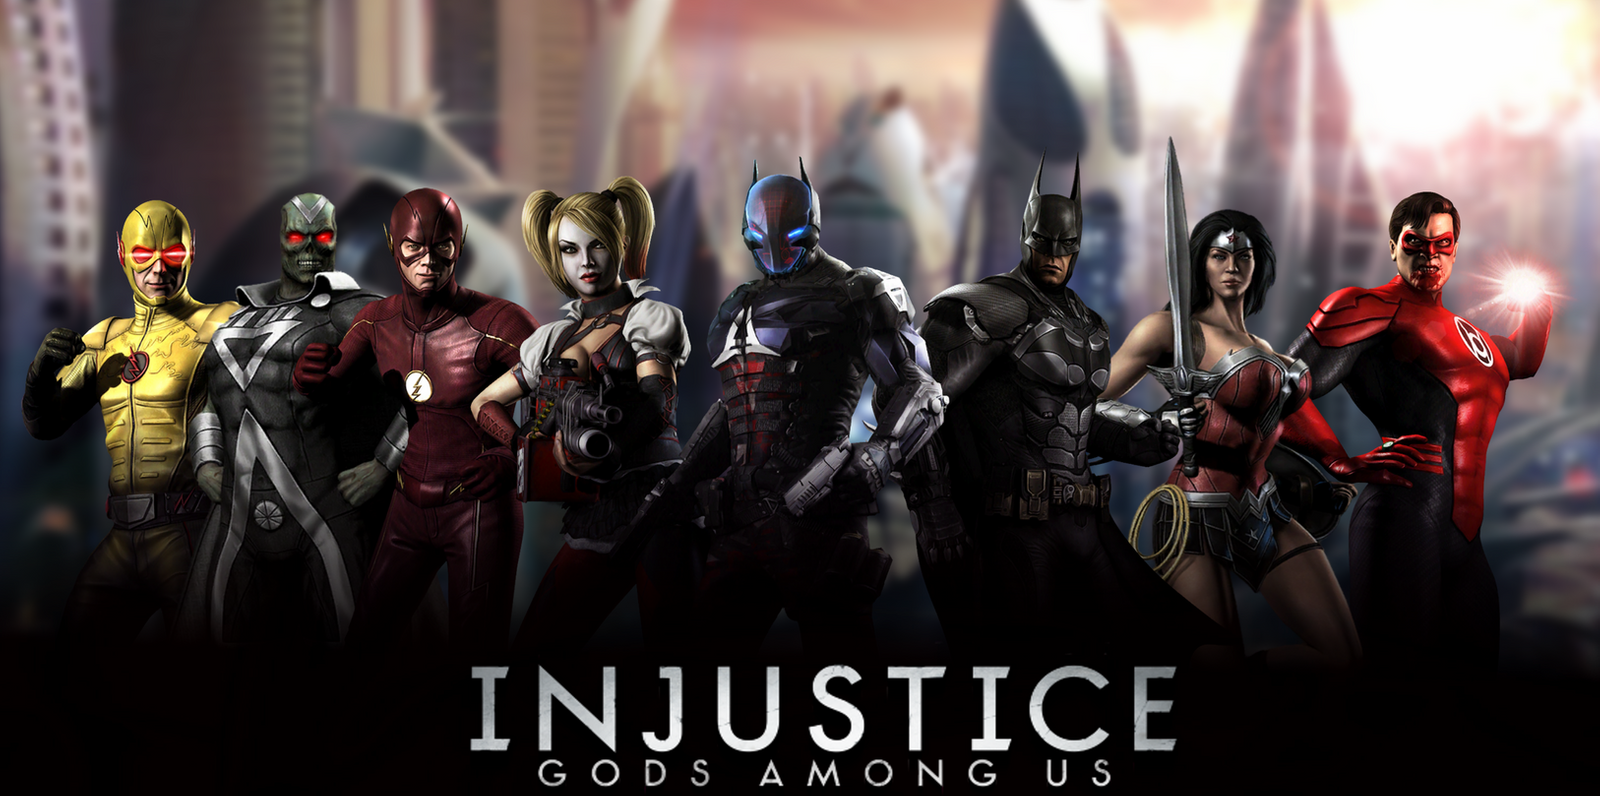 Injustice League Wallpaper. Red Hood Injustice 2 Wallpaper, Injustice 2 Supergirl Wallpaper and Shazam Injustice Wallpaper